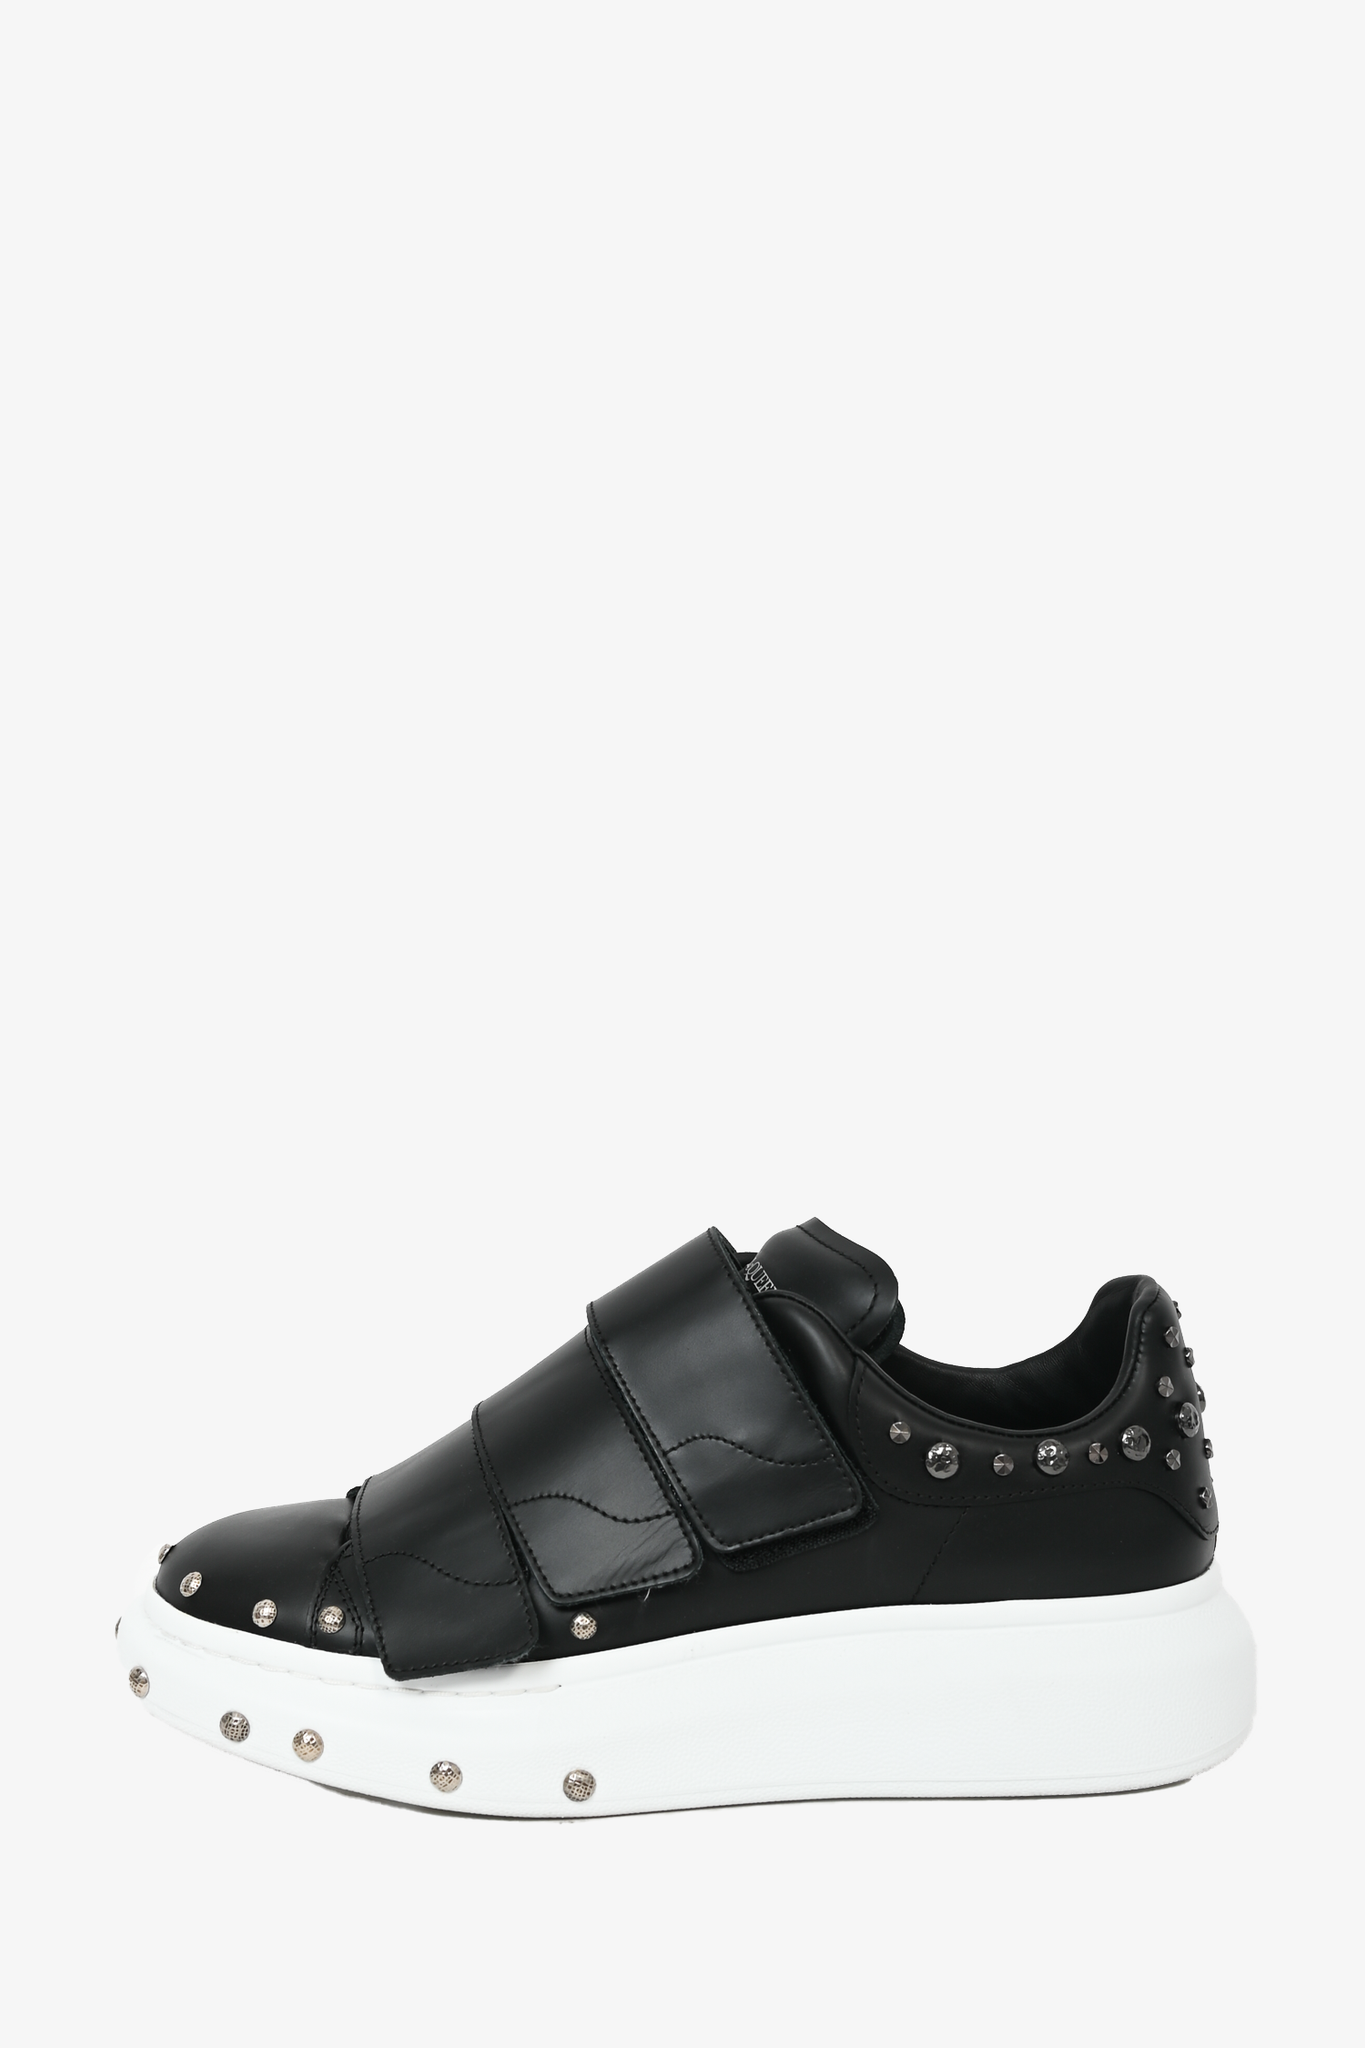 Oversized Sneaker in Black/White/Grey | Alexander McQueen US